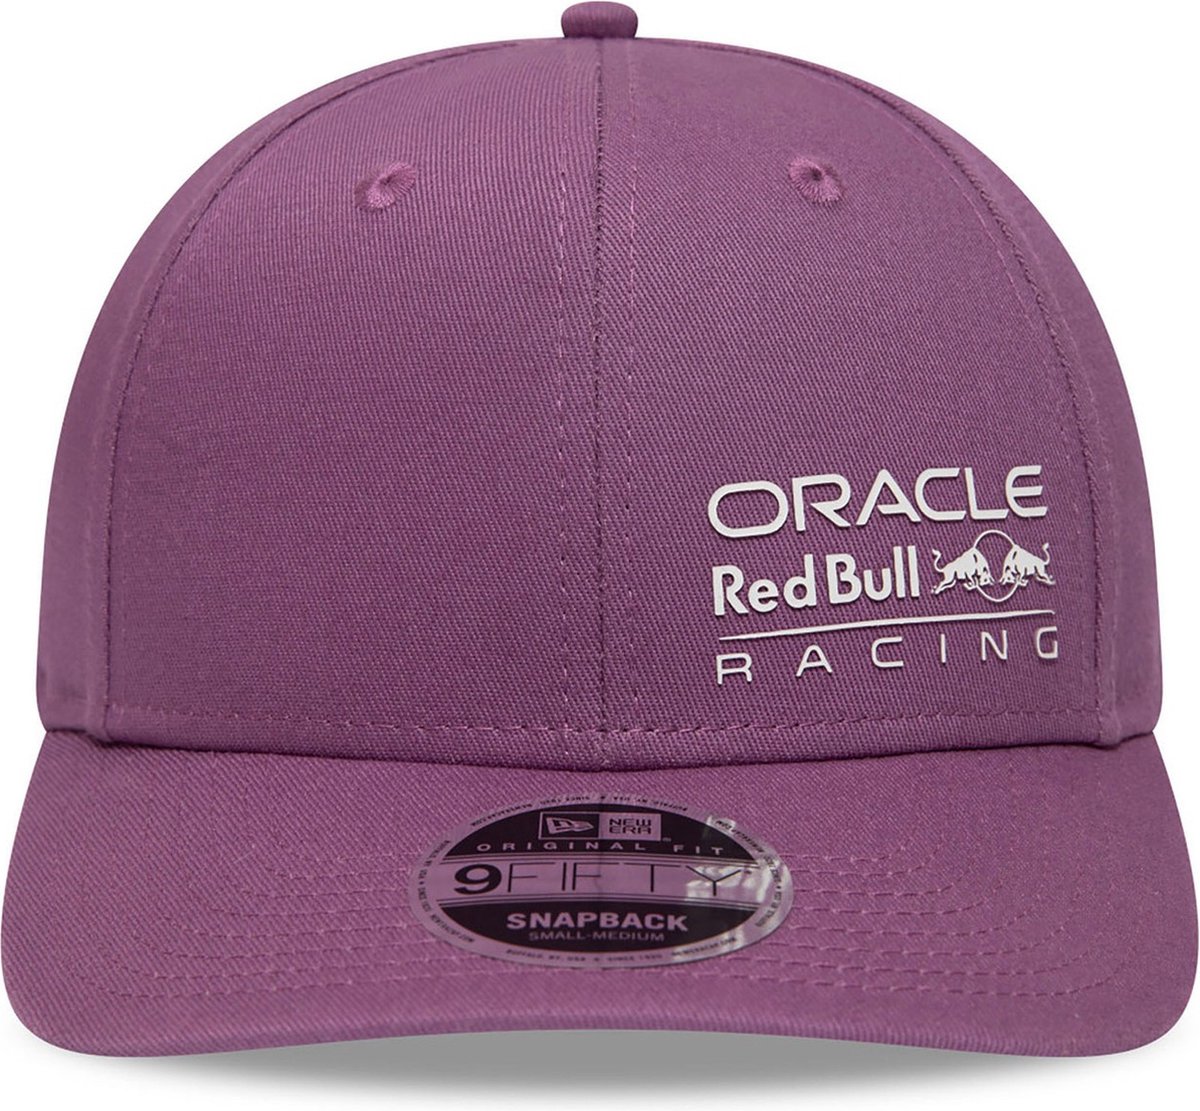 Red Bull Racing Purple 9FIFTY Snapback Cap-S/M